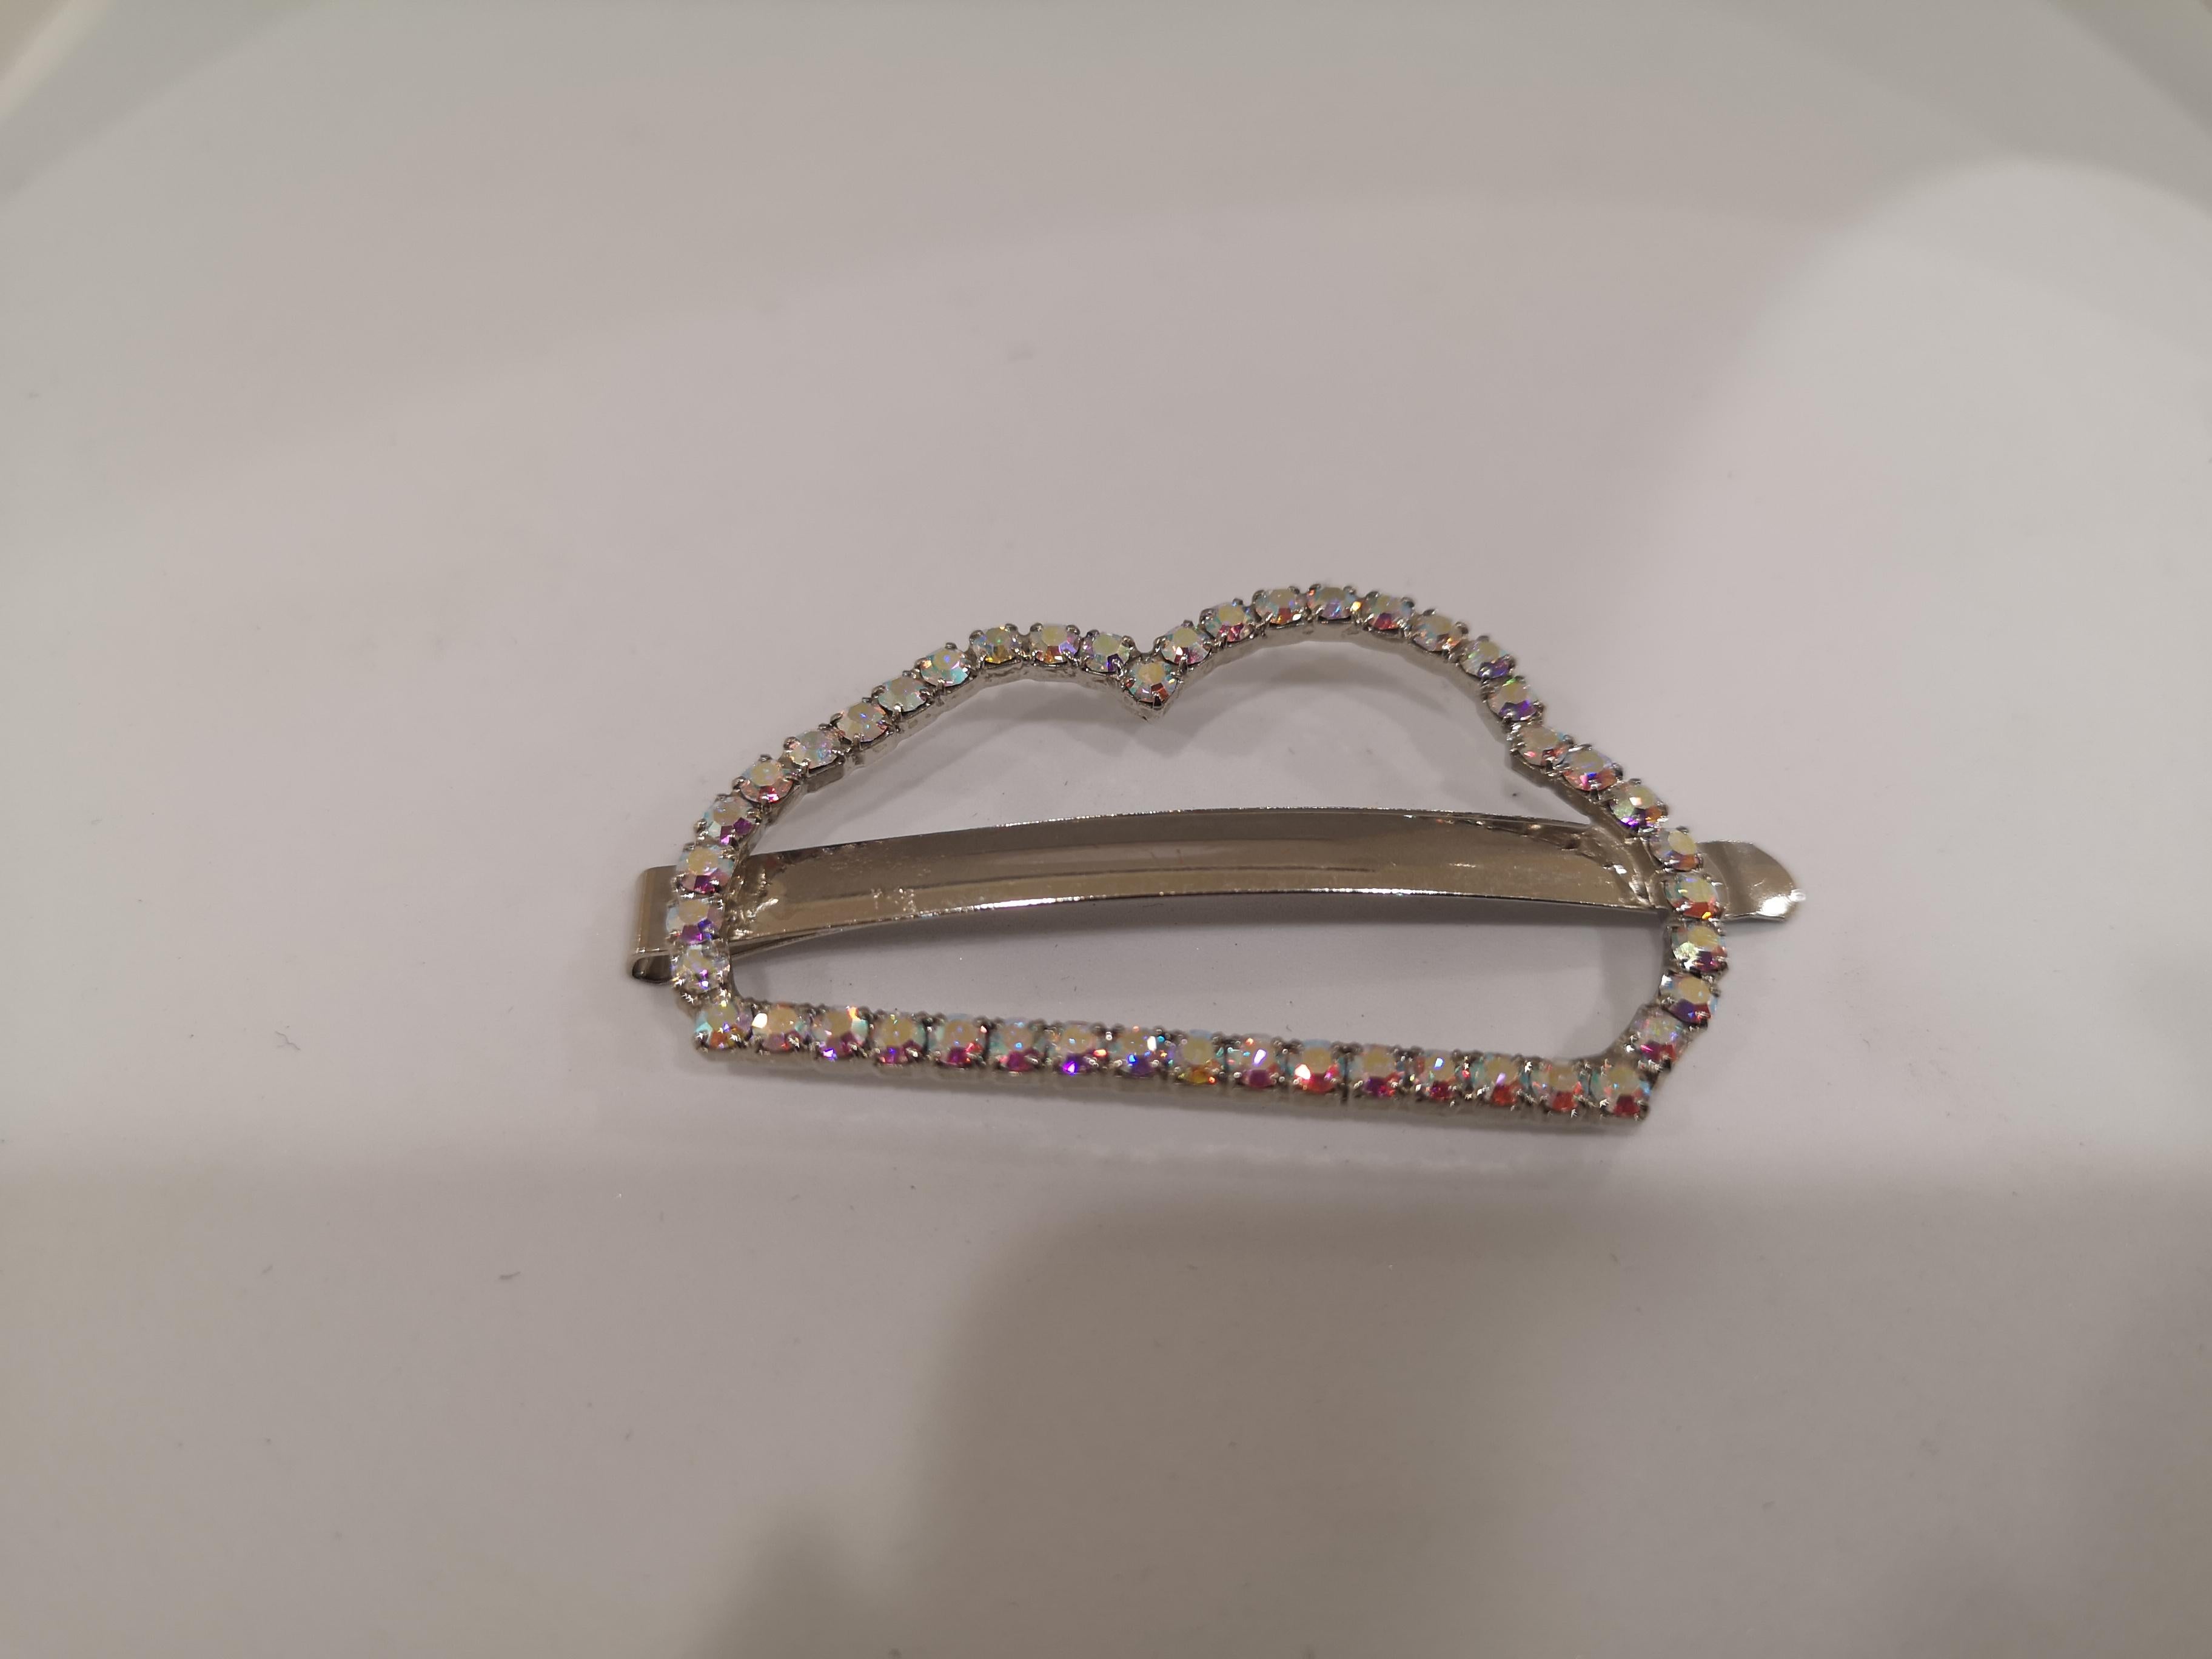 LisaC swarovski stone hair clip
totally handmade in italy with real swarovski stones
measurements: 7 cm